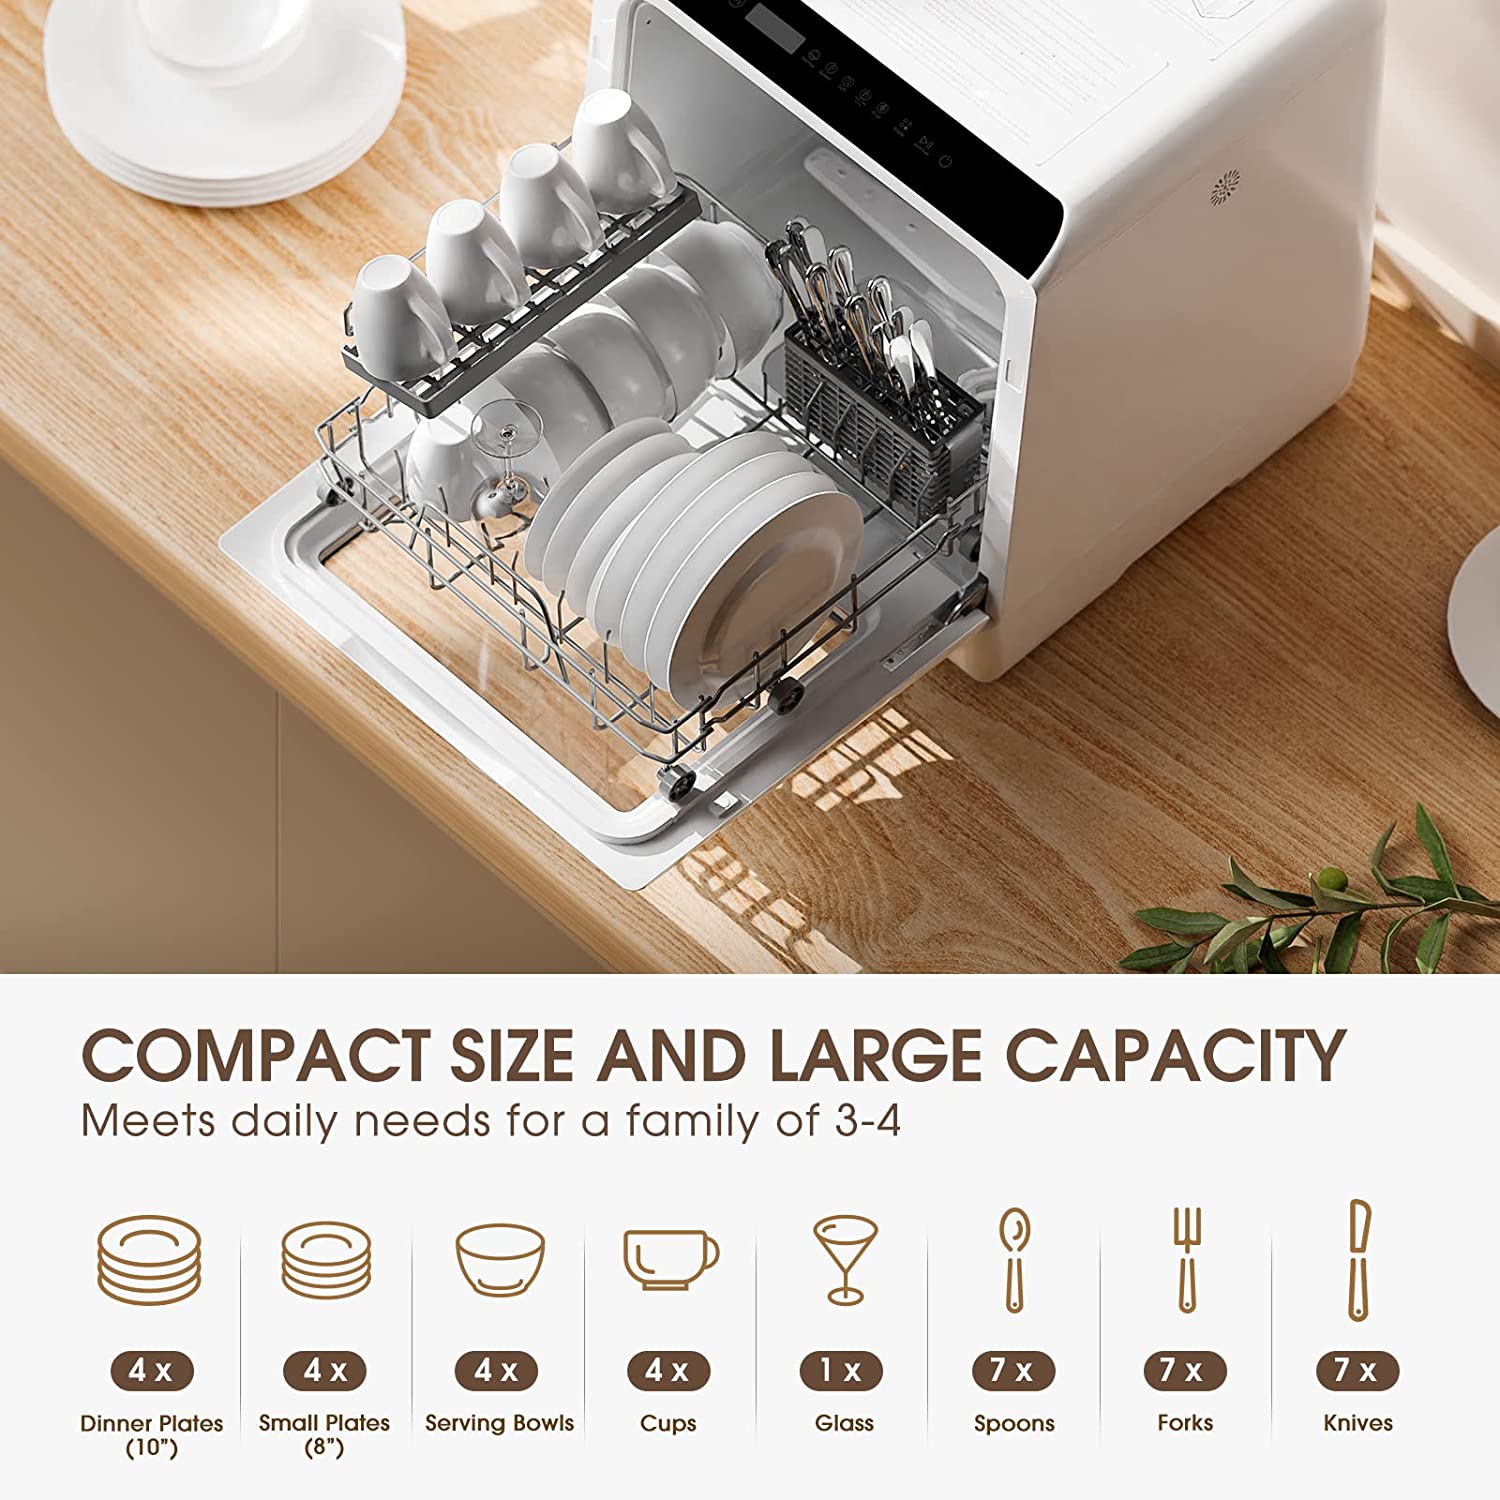 NOVETE Compact Dishwashers Portable Countertop Dishwasher